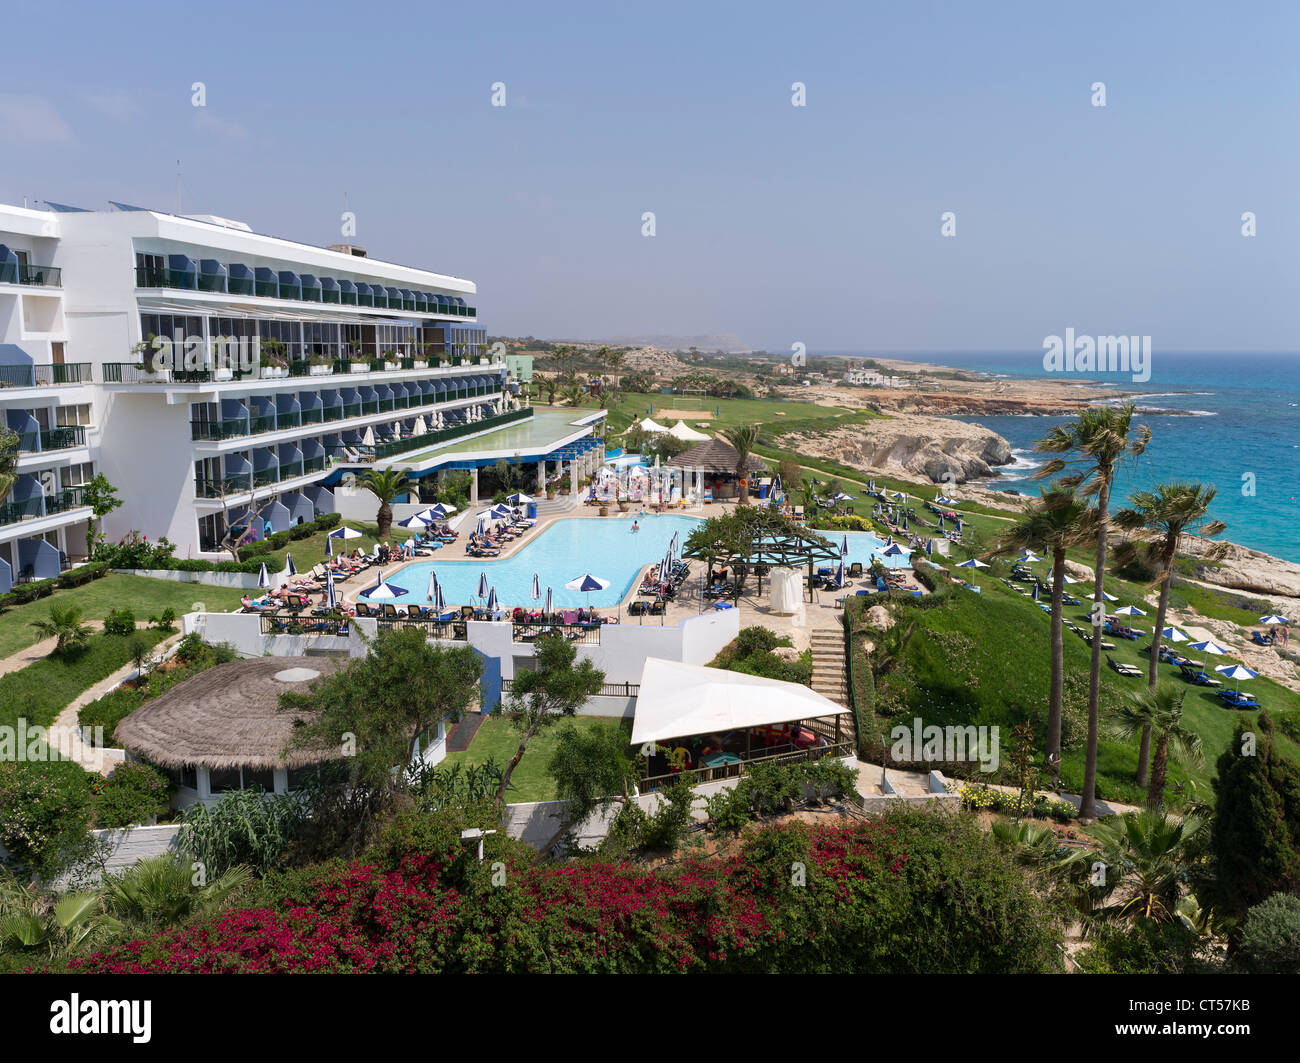 dh Sungarden Beach Hotel AYIA NAPA CYPRUS SOUTH Atlantica Club Hotel piscina e terreno hotel per vacanze Foto Stock